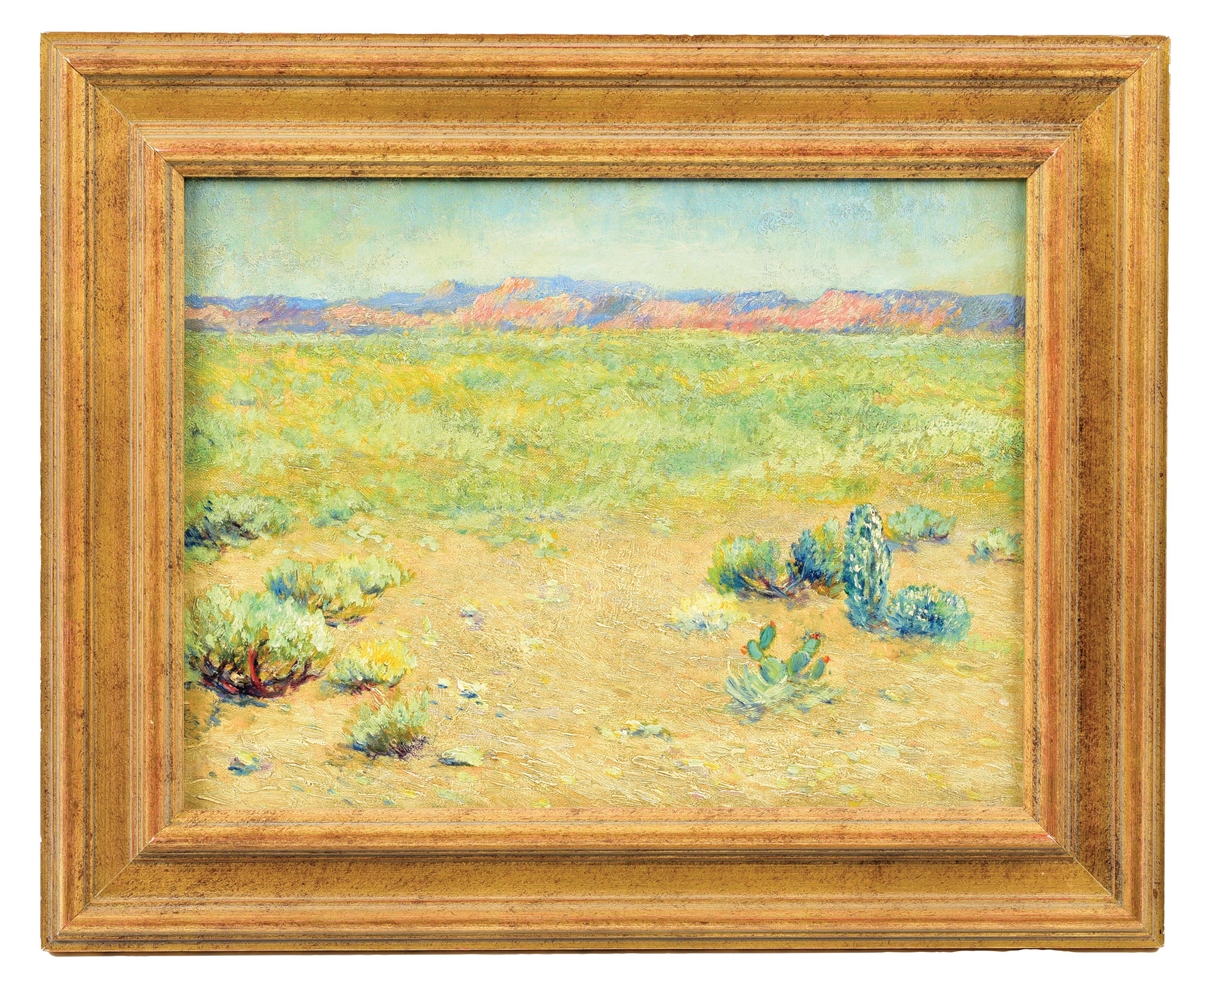 ALBERT LOREY GROLL (AMERICAN, 1866 - 1952) "ARIZONA DESERT".